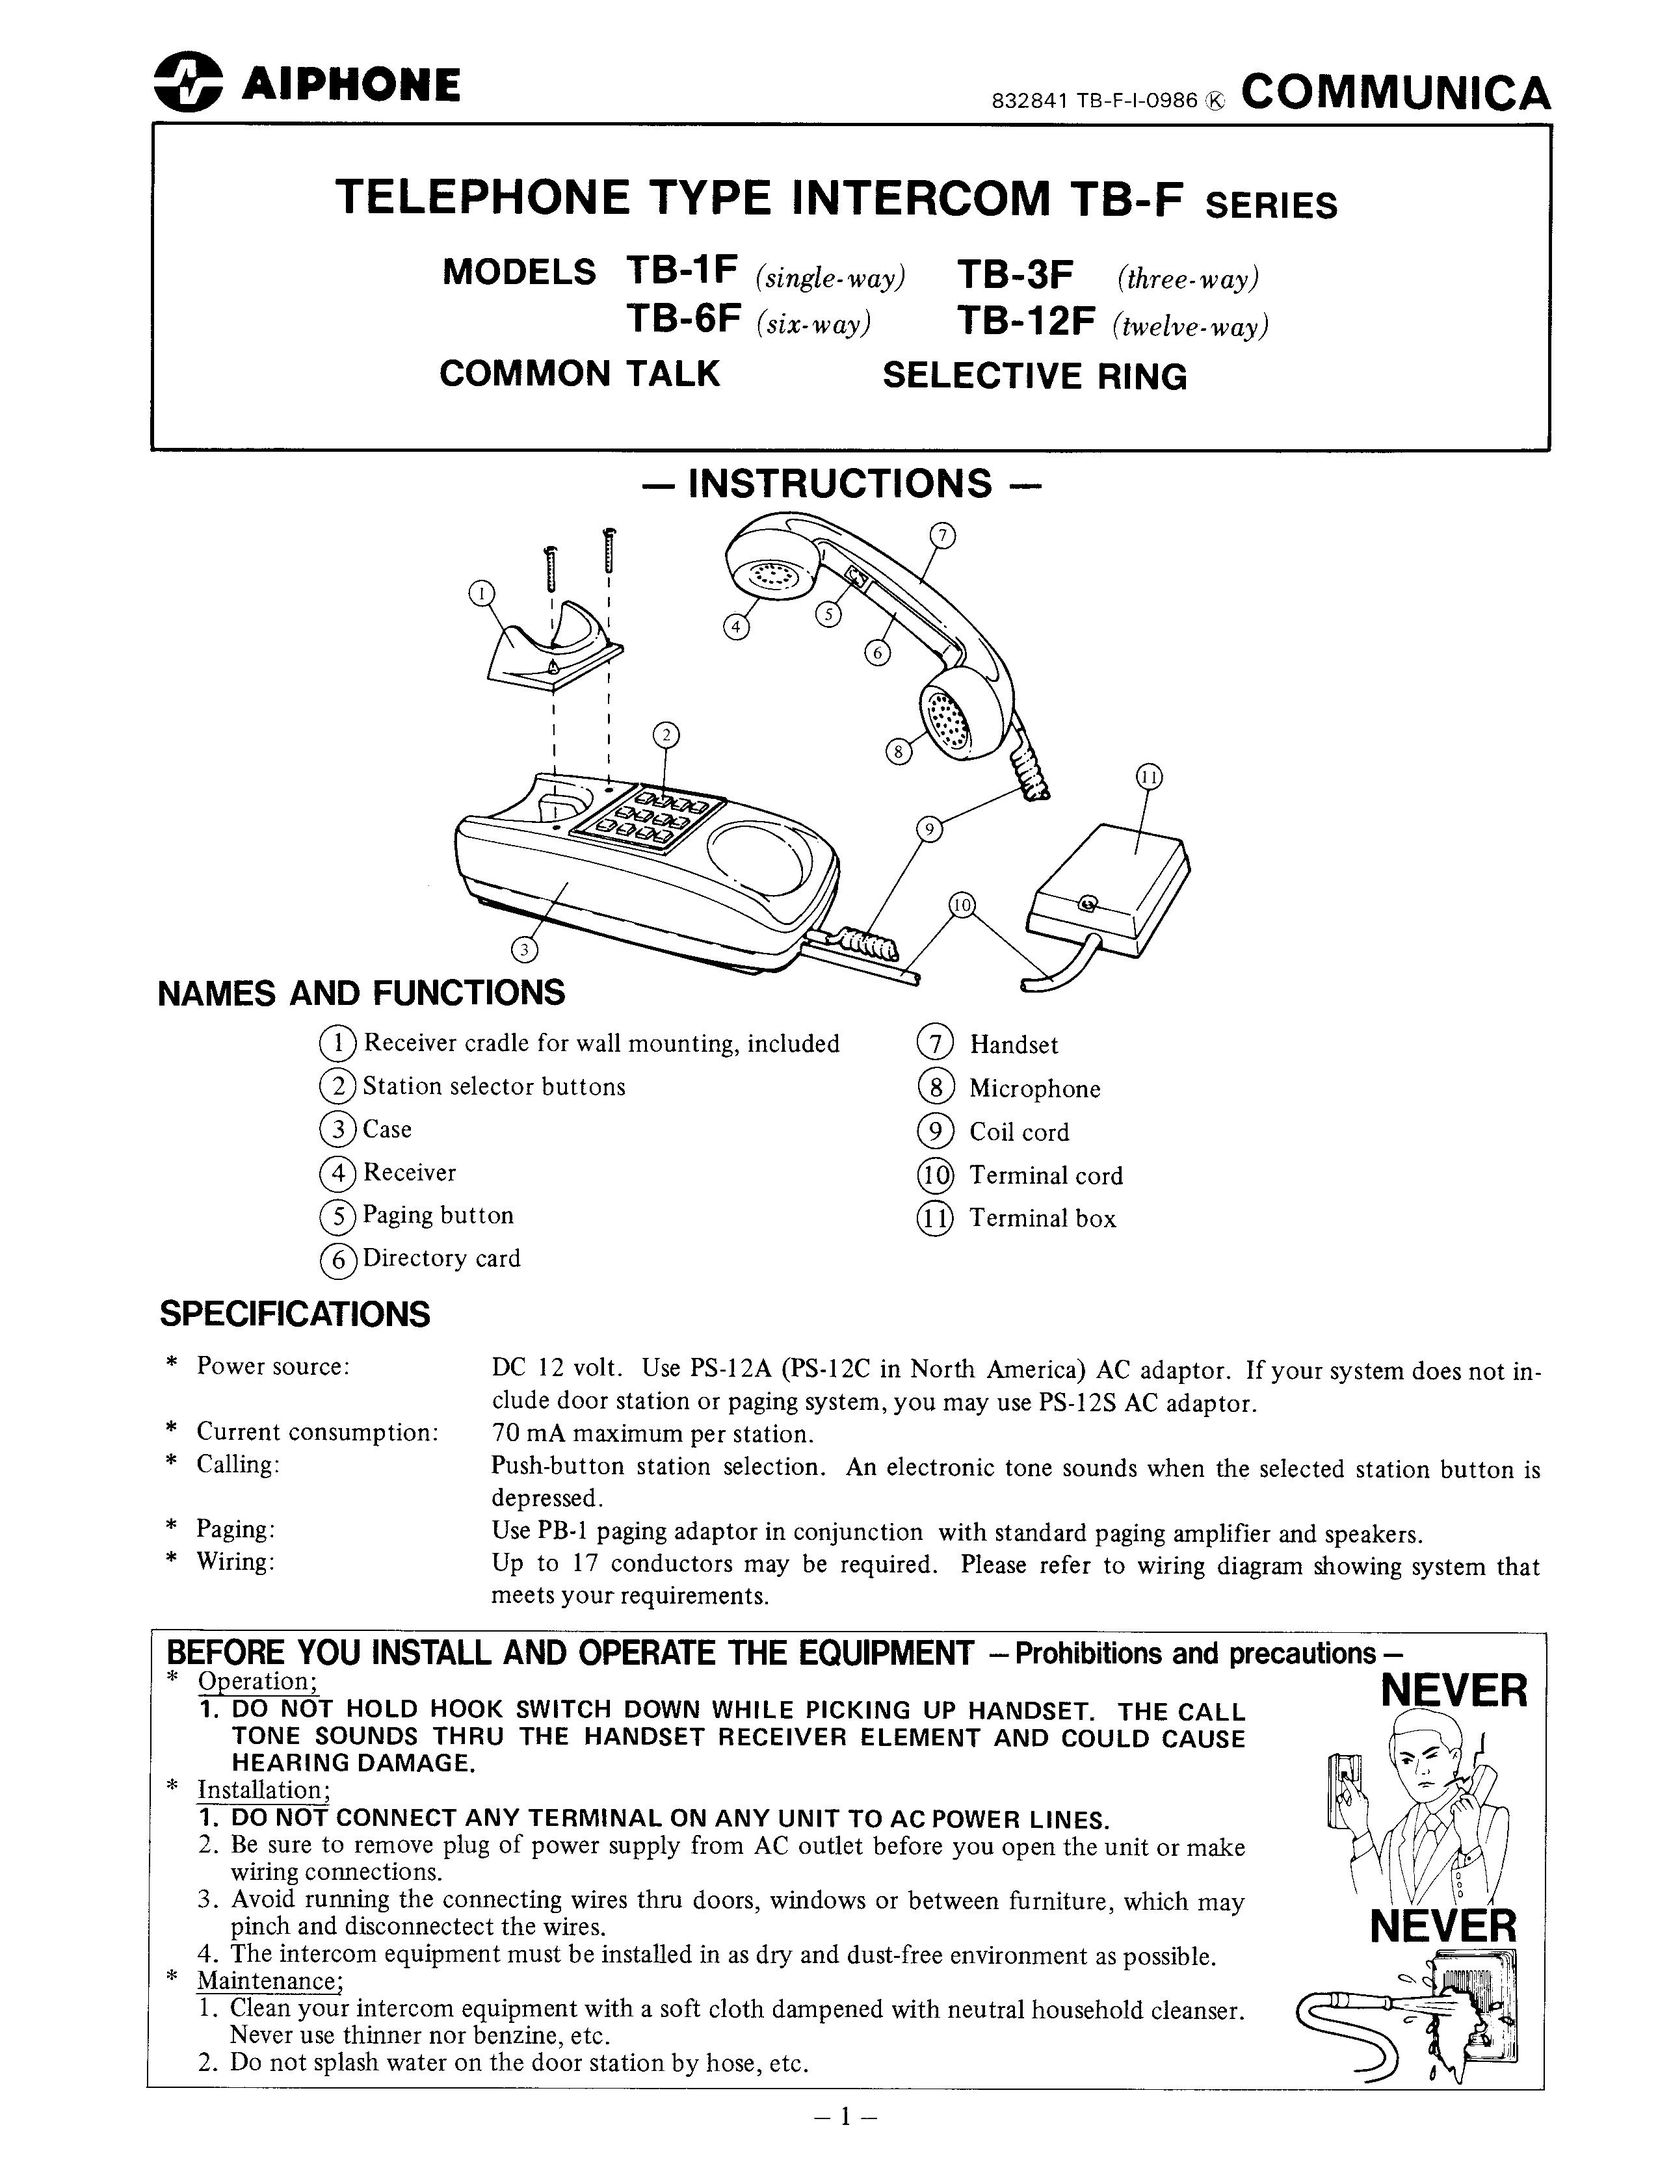 Aiphone TB-3F Telephone User Manual